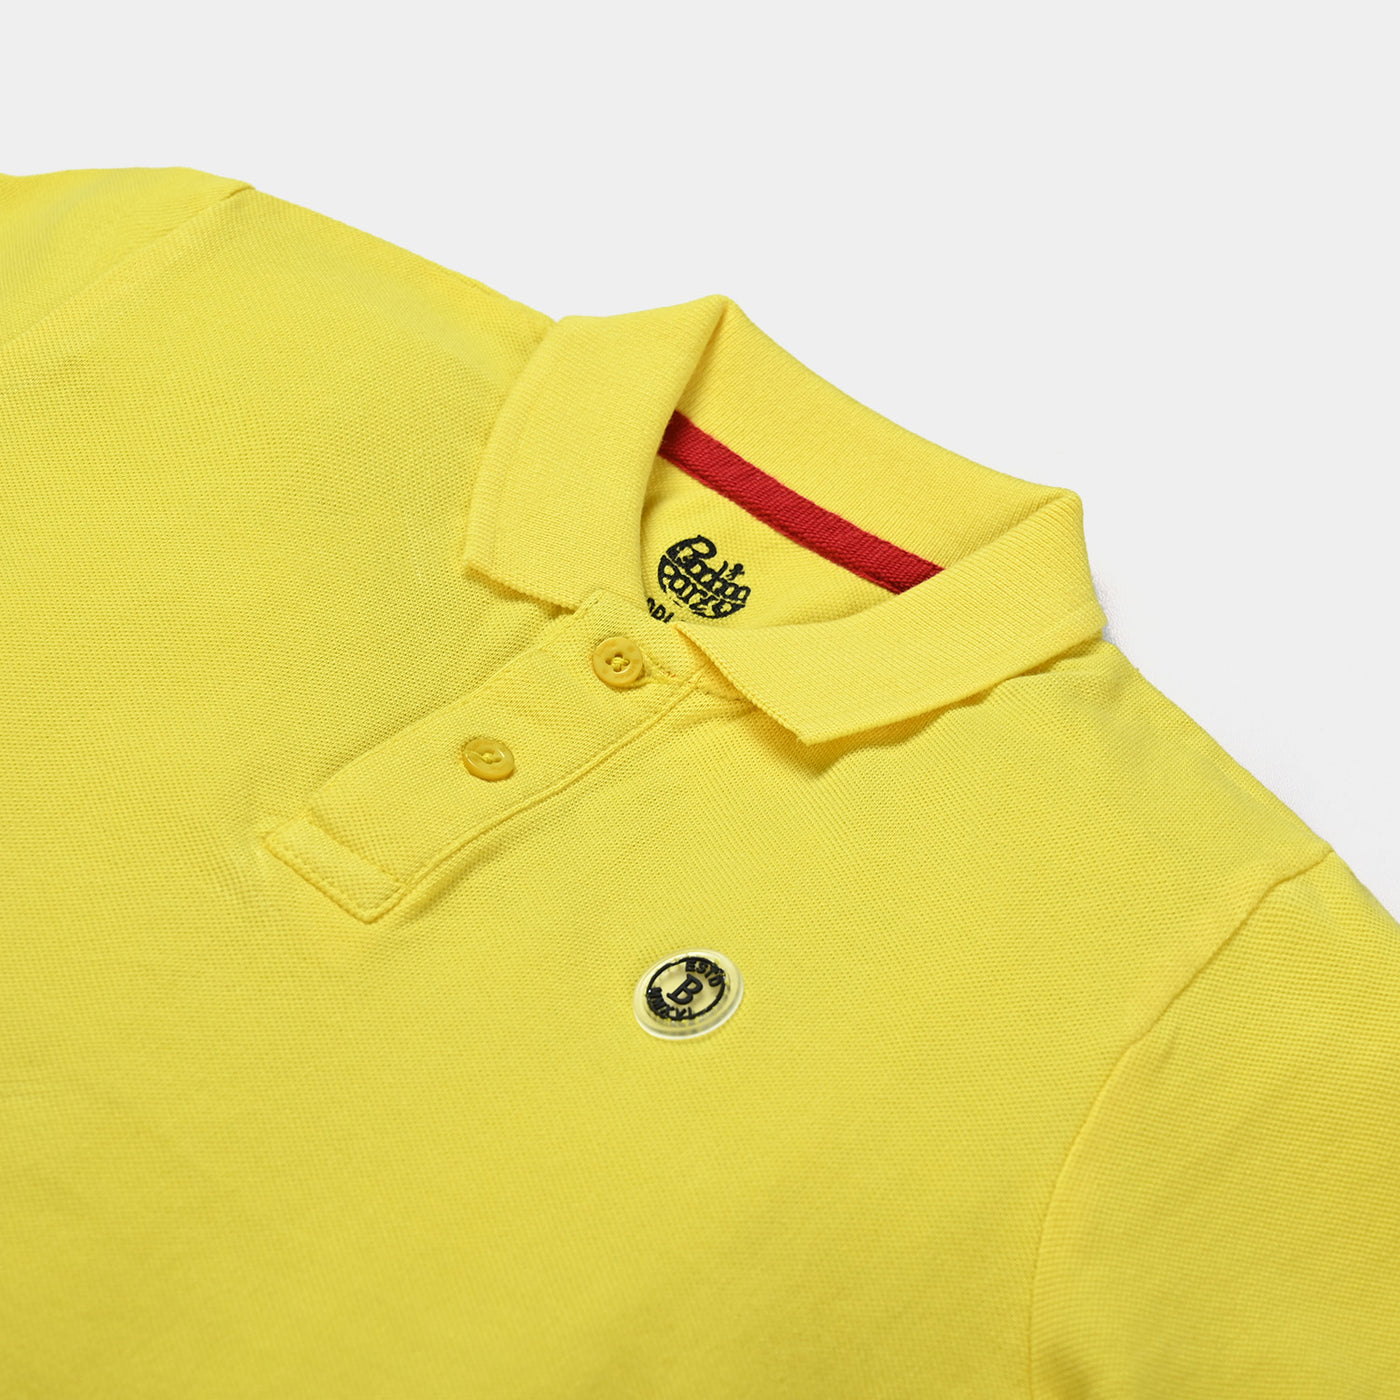 Boys Cotton PK Polo T-Shirt Basic-B. Yellow